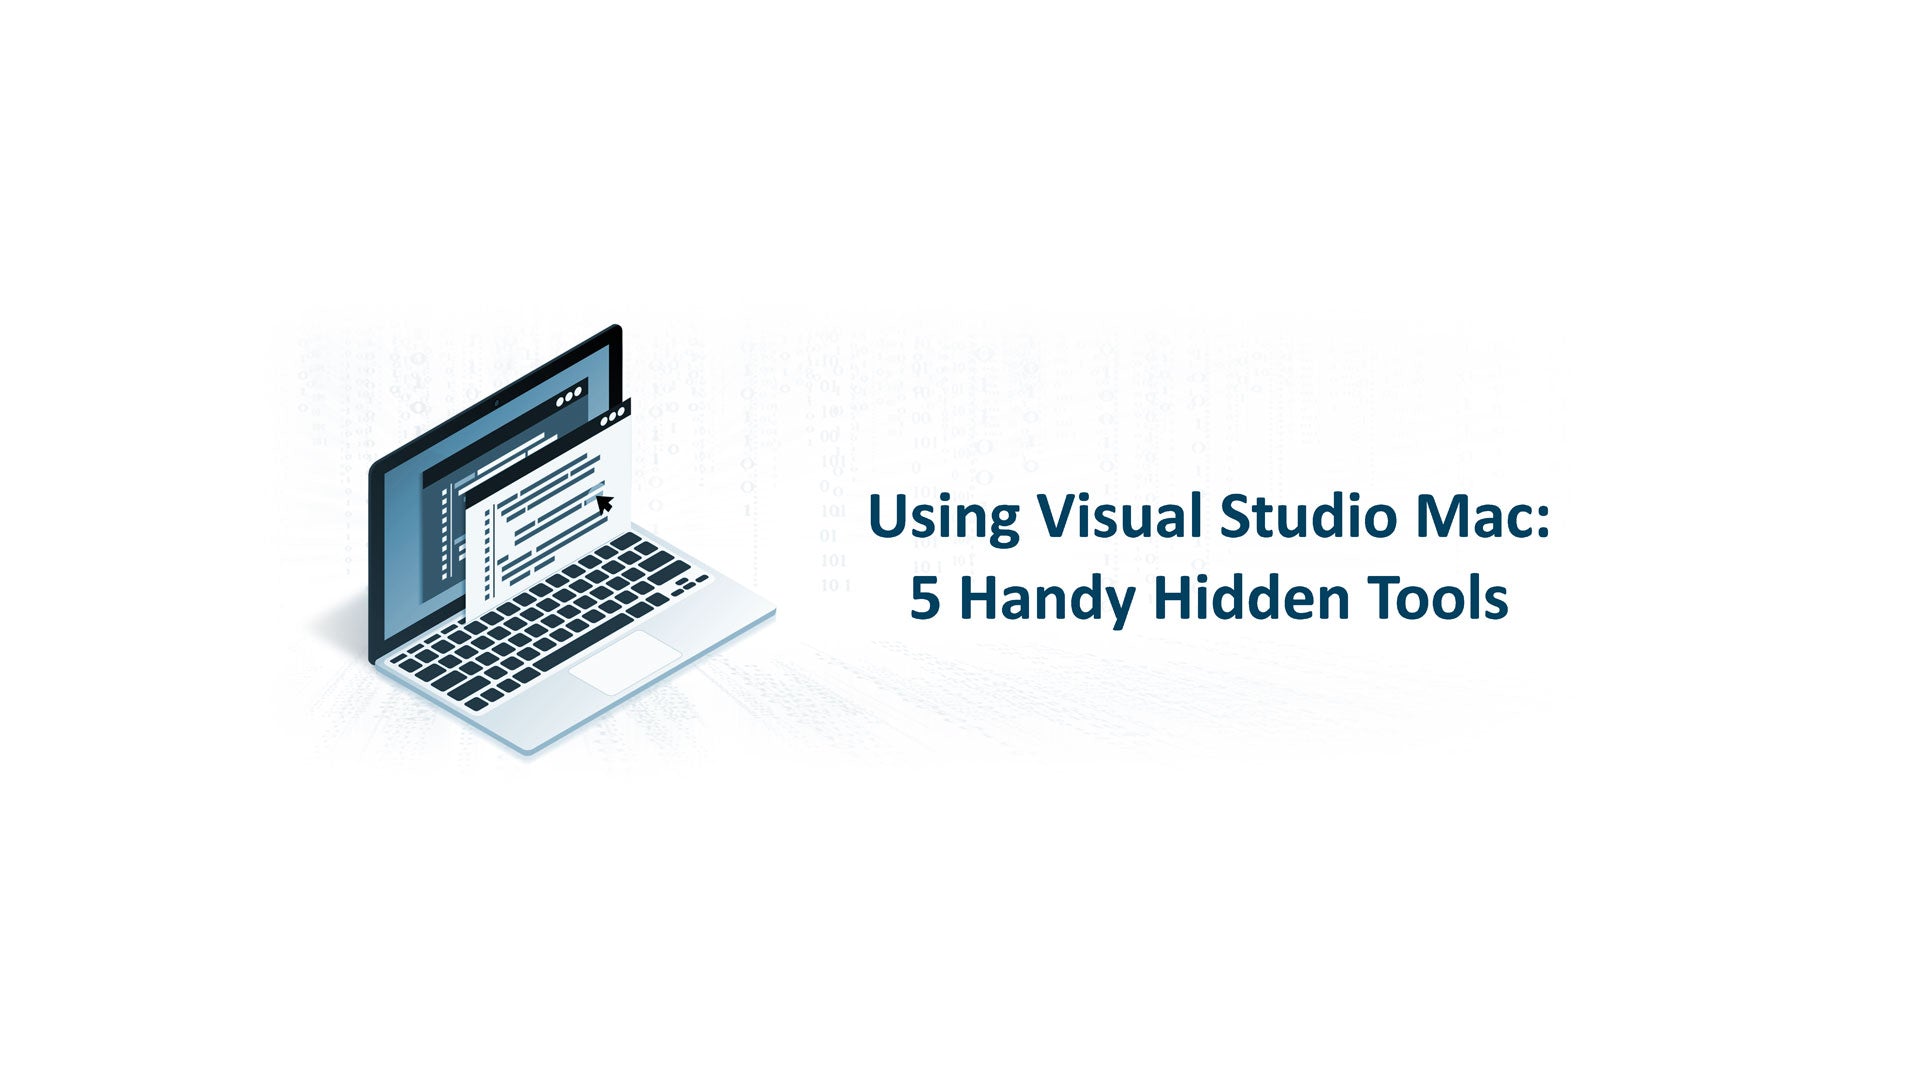 is visual studio for the mac just xamarin studio rebranded